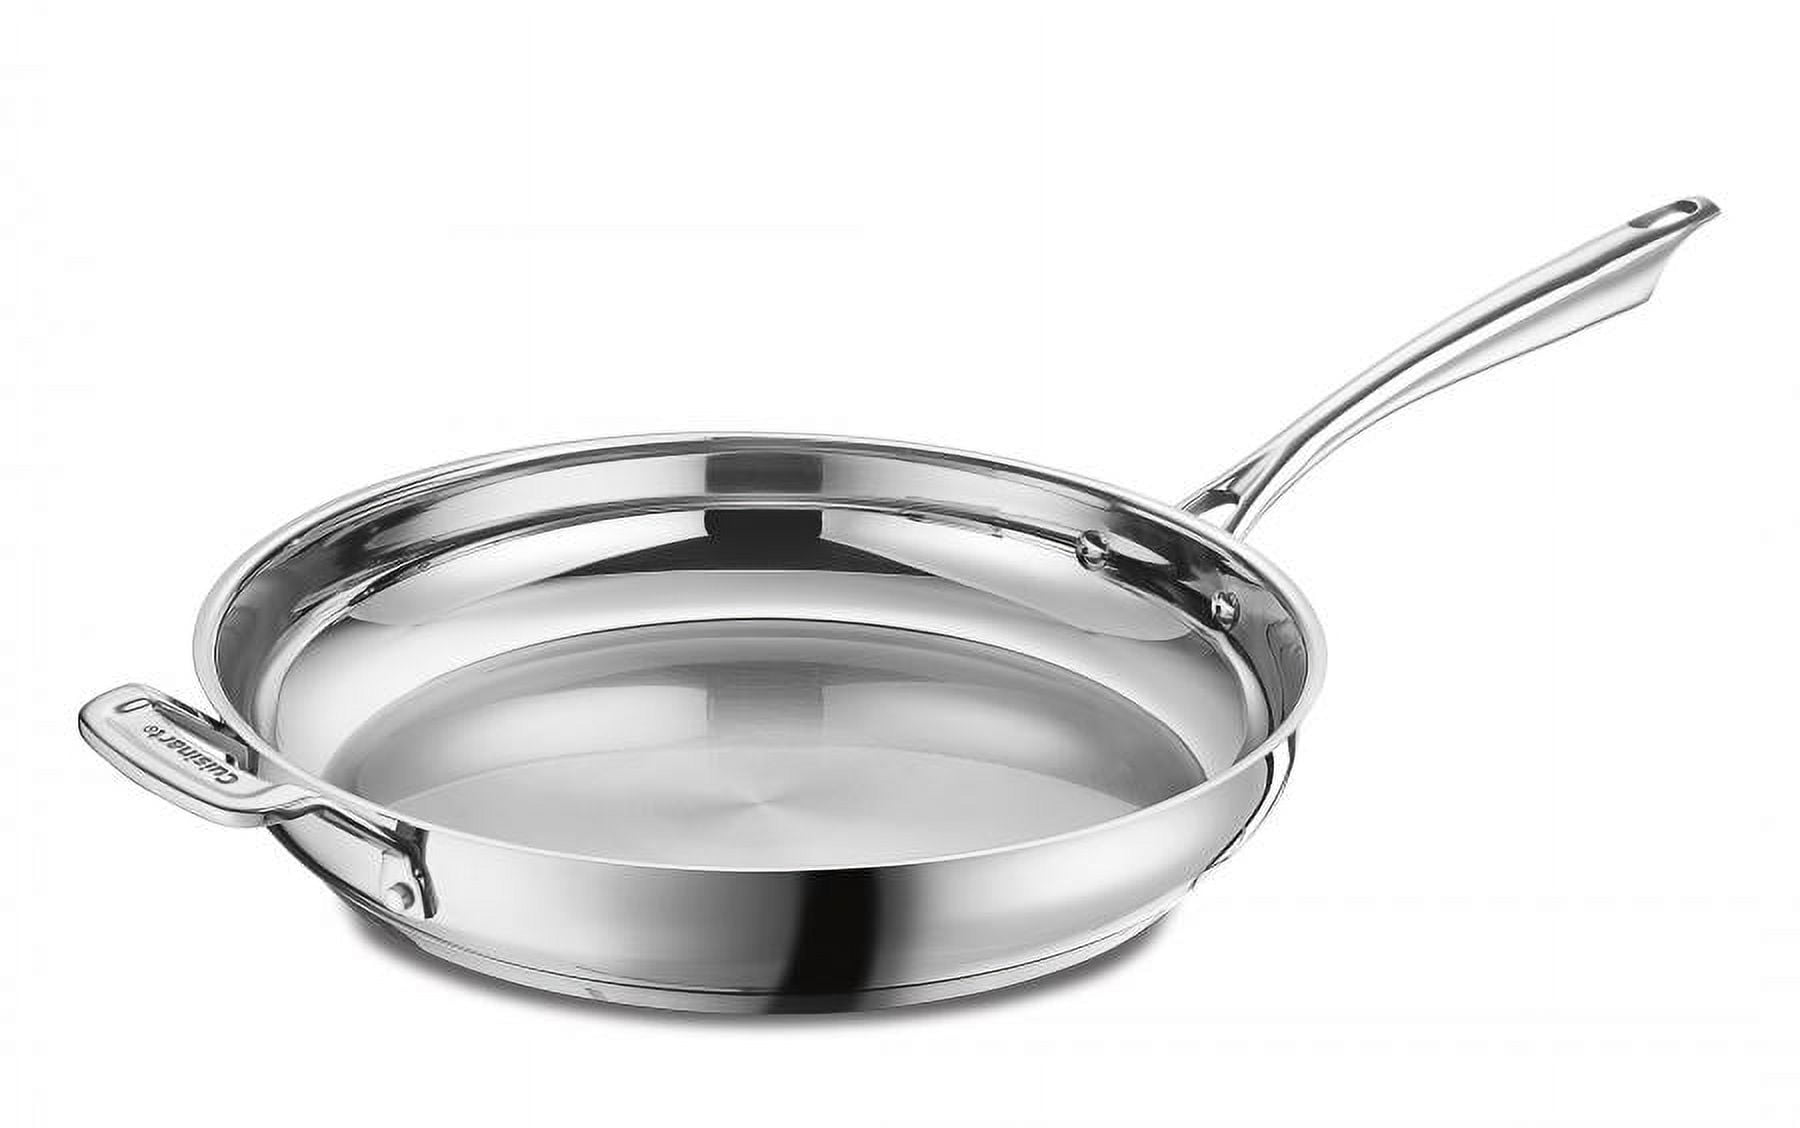 Staineless Steel Cuisinart Pans - Skillets & Frying Pans - Okotoks